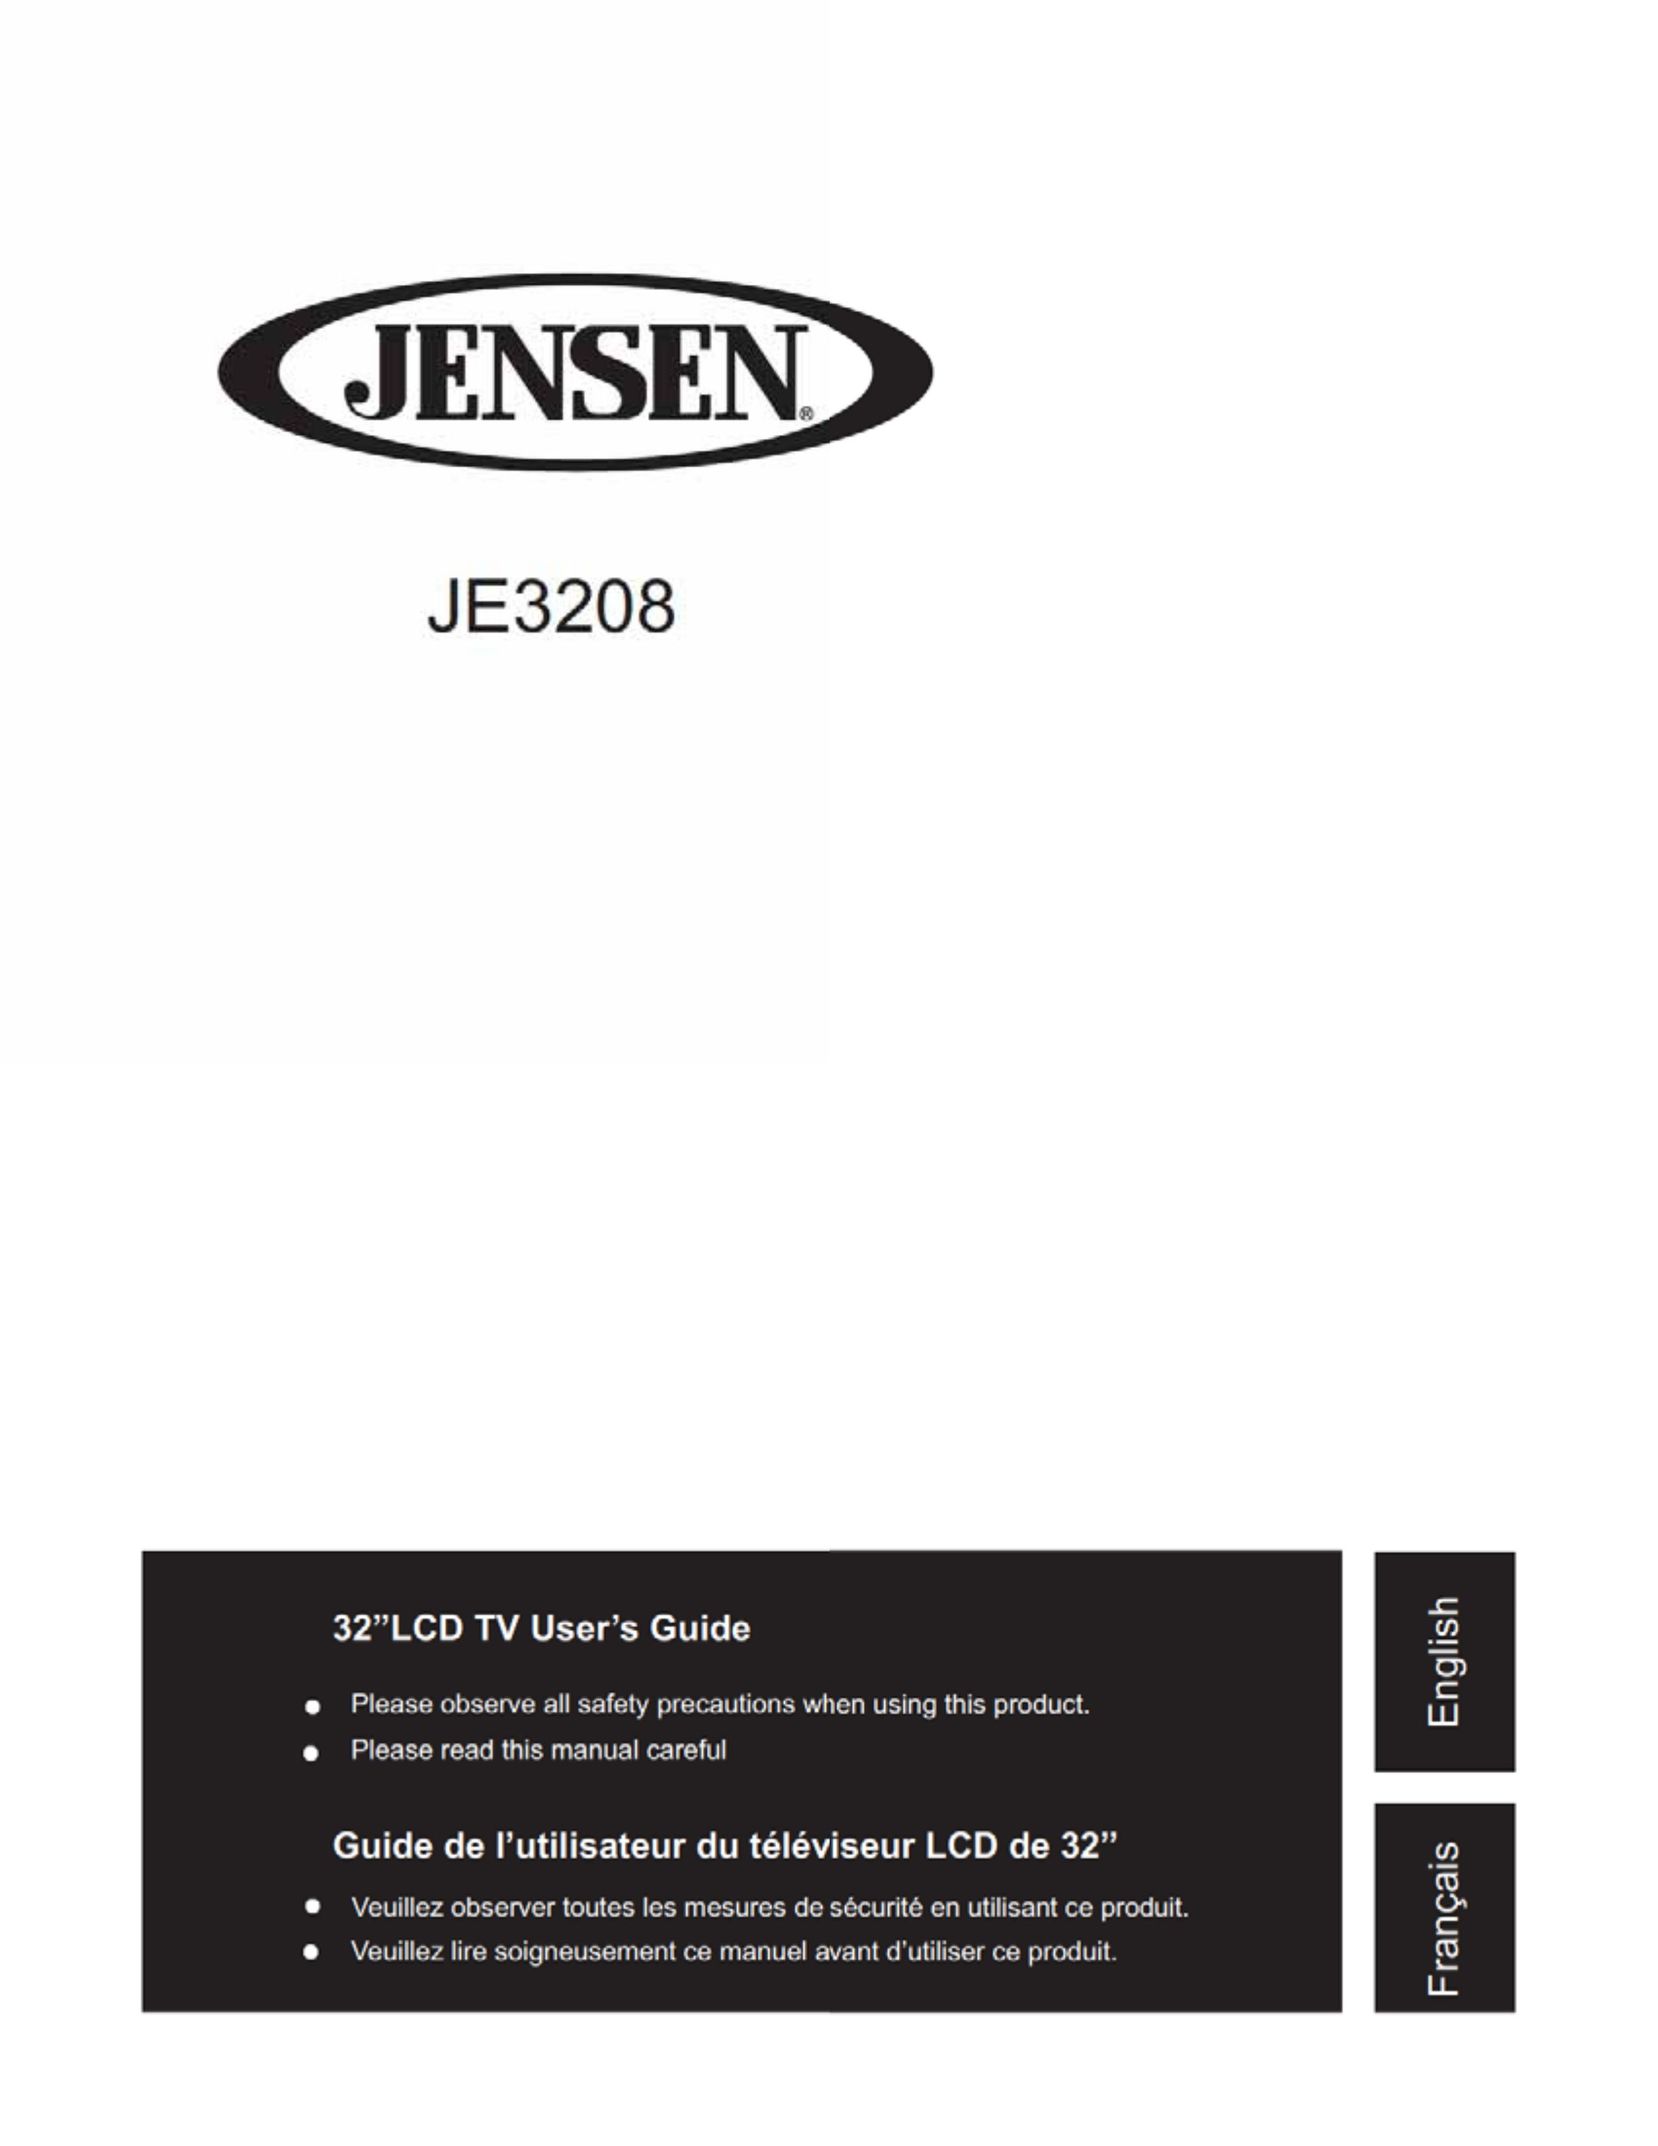 Jensen JE3208 Flat Panel Television User Manual